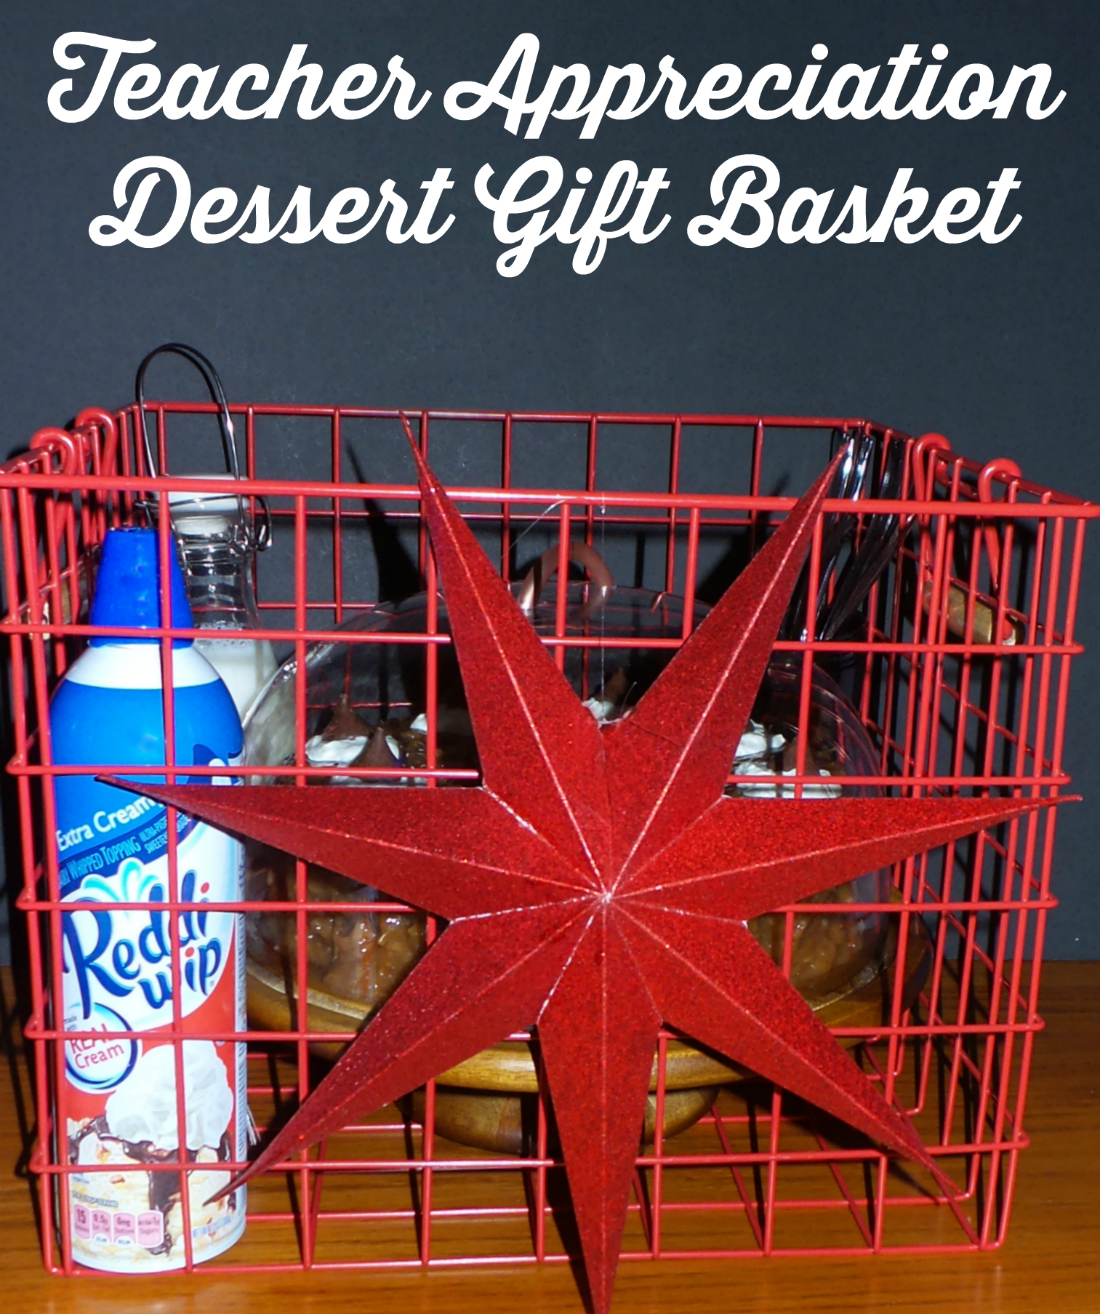 teacher appreciation dessert gift basket